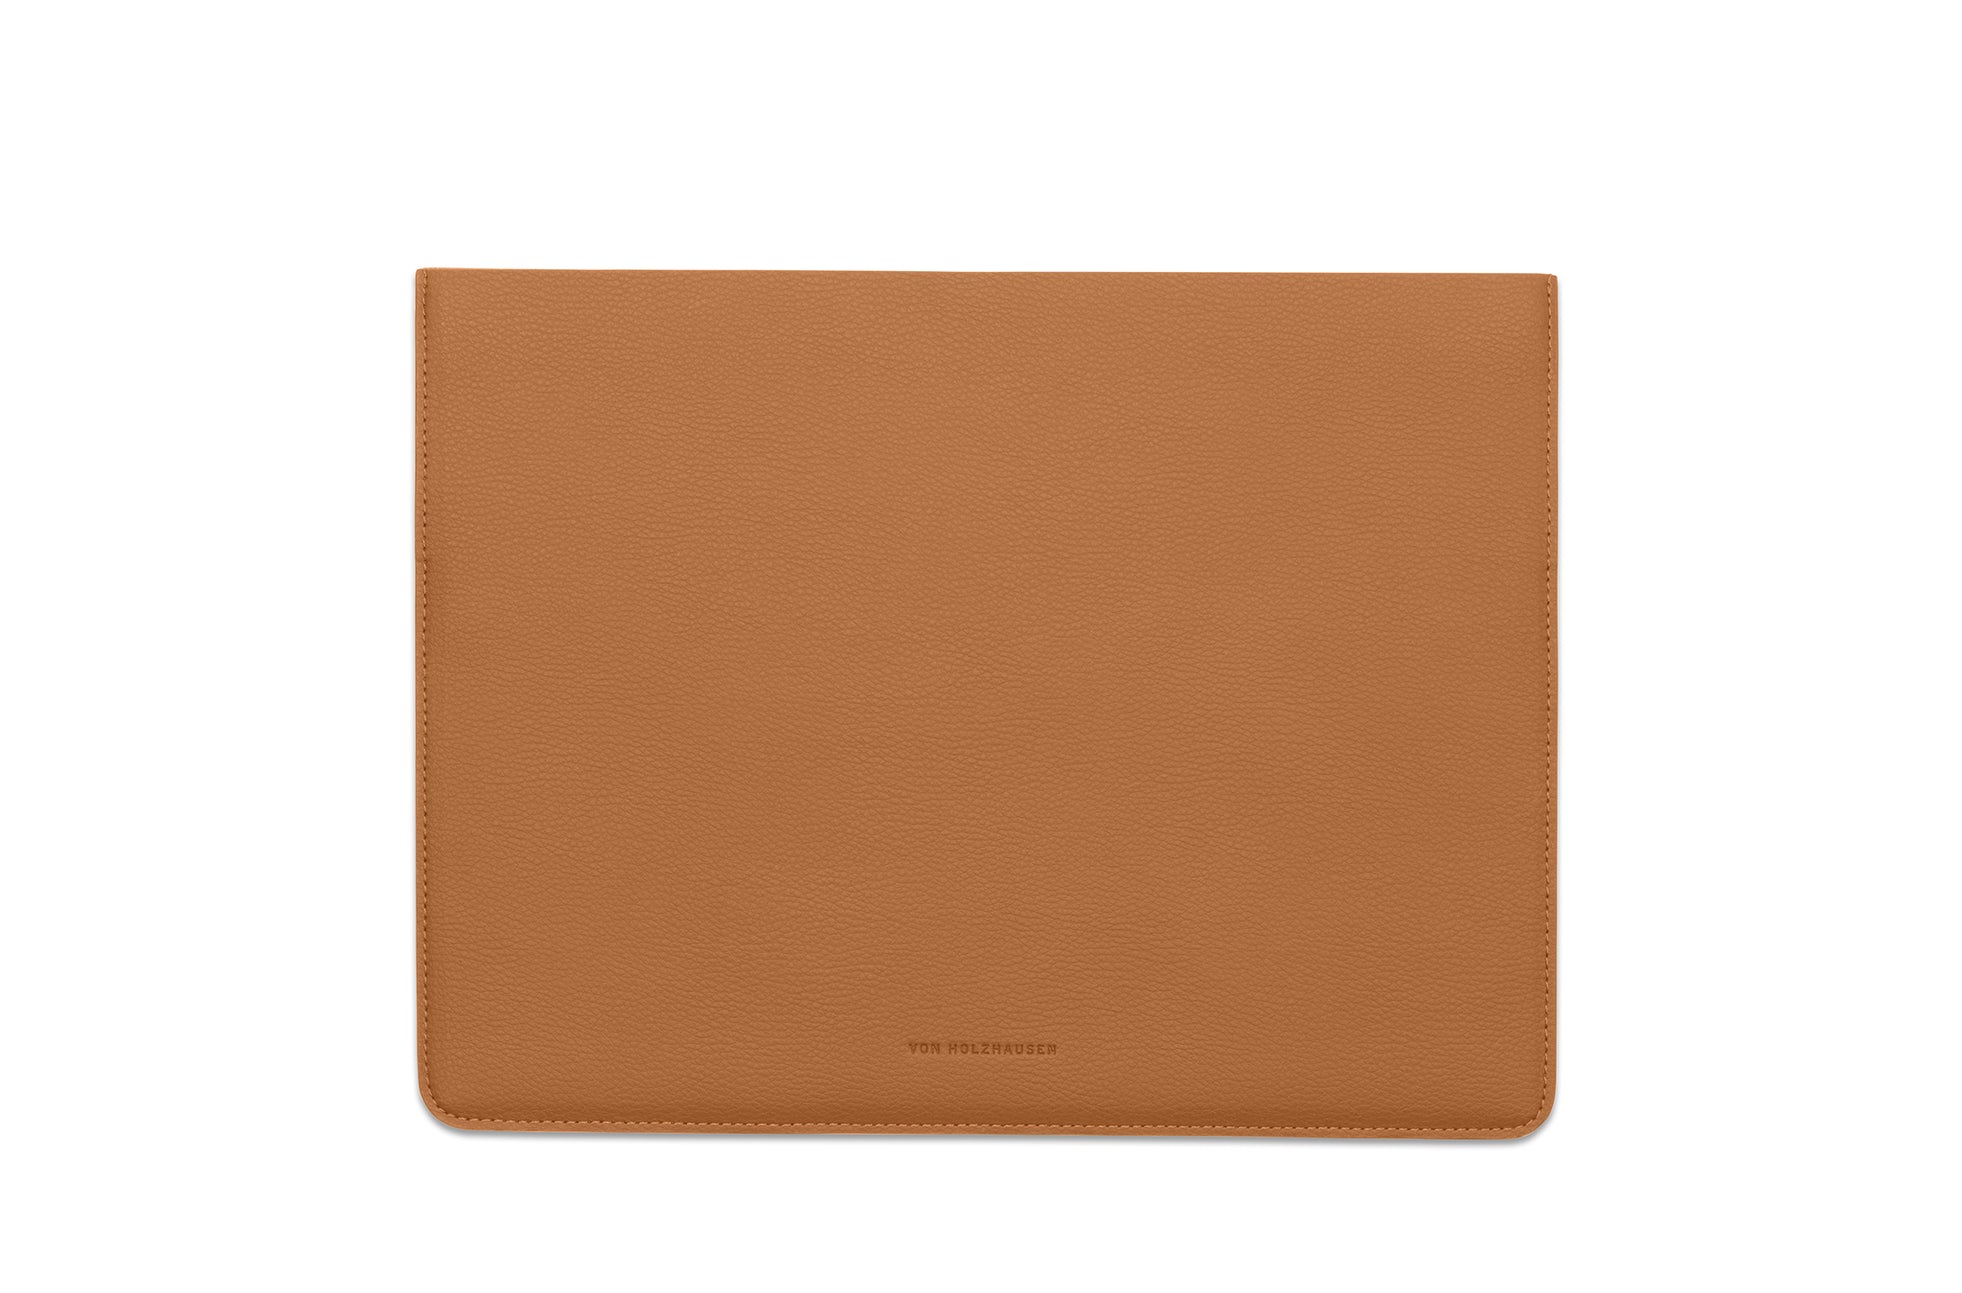 The MacBook Sleeve 13-inch - Sample Sale in Technik in Caramel image 2